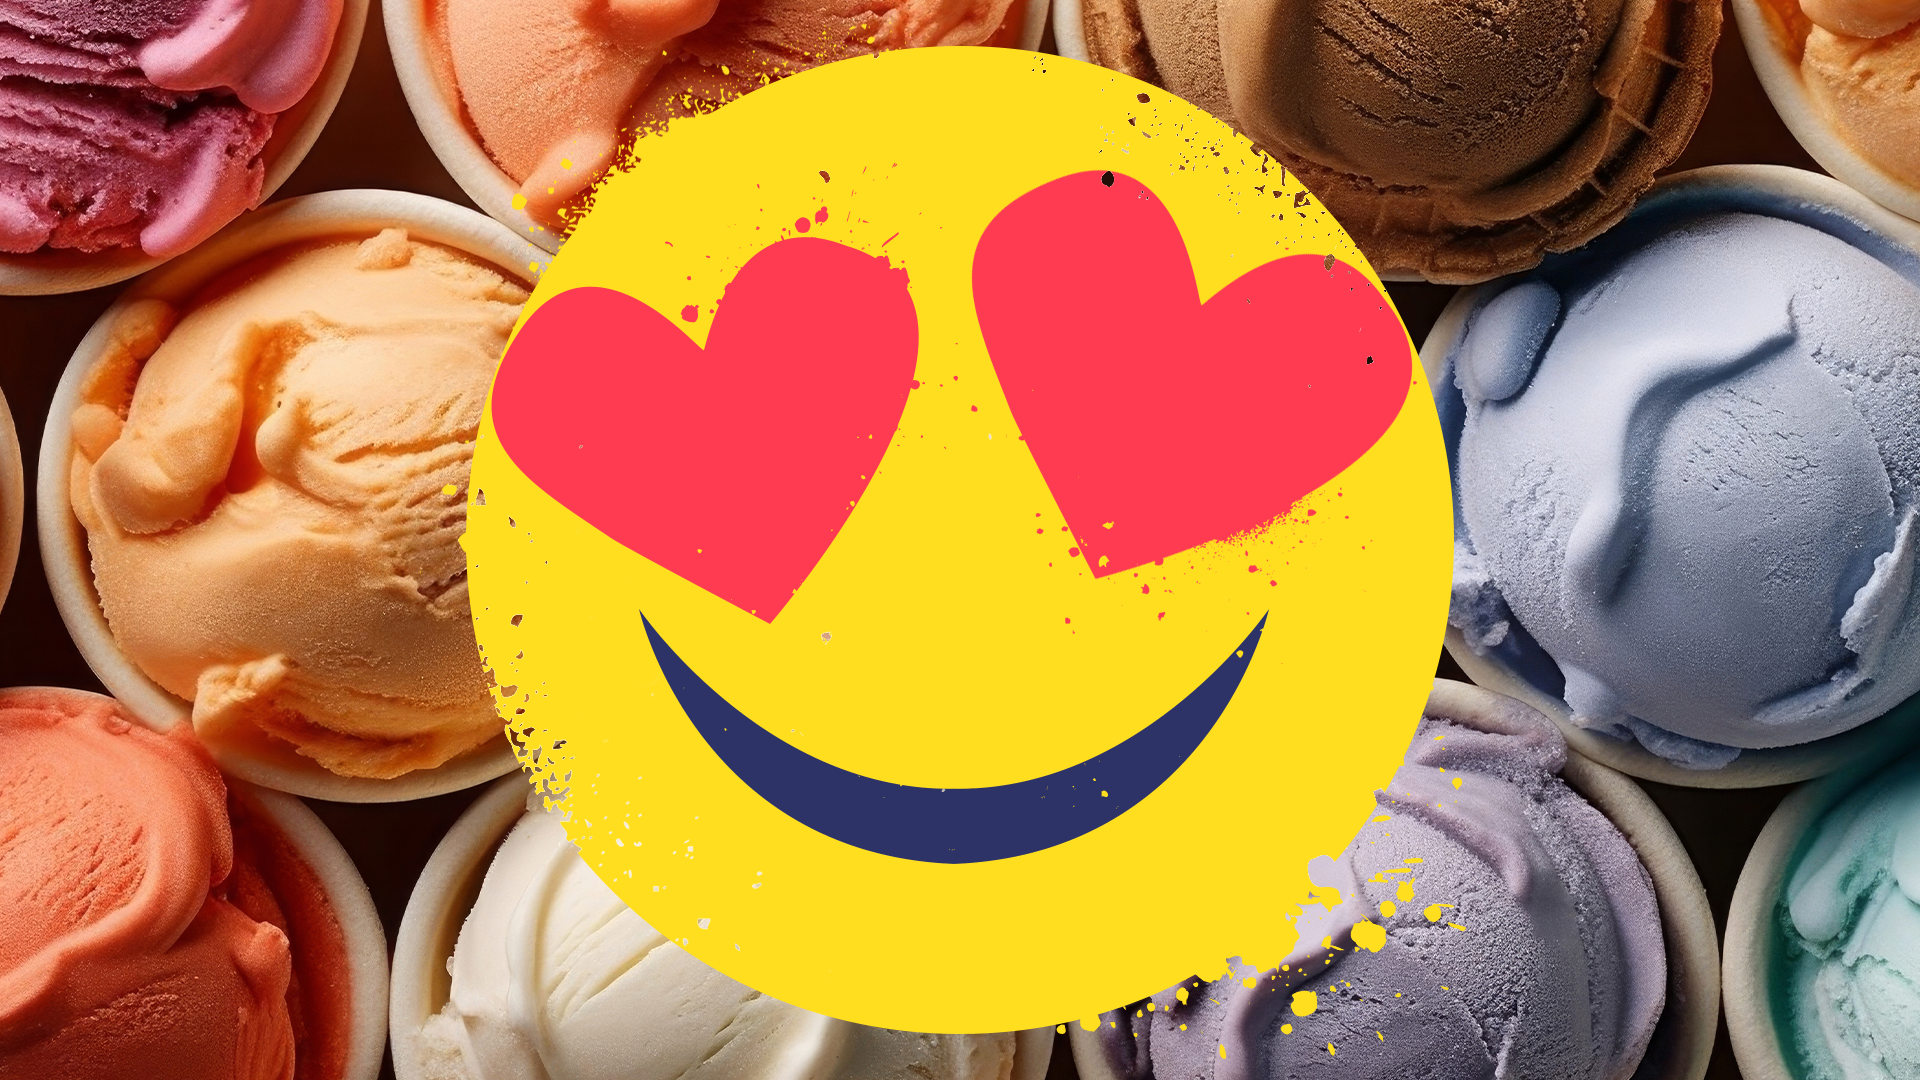 Ice cream and heart eyes emoji